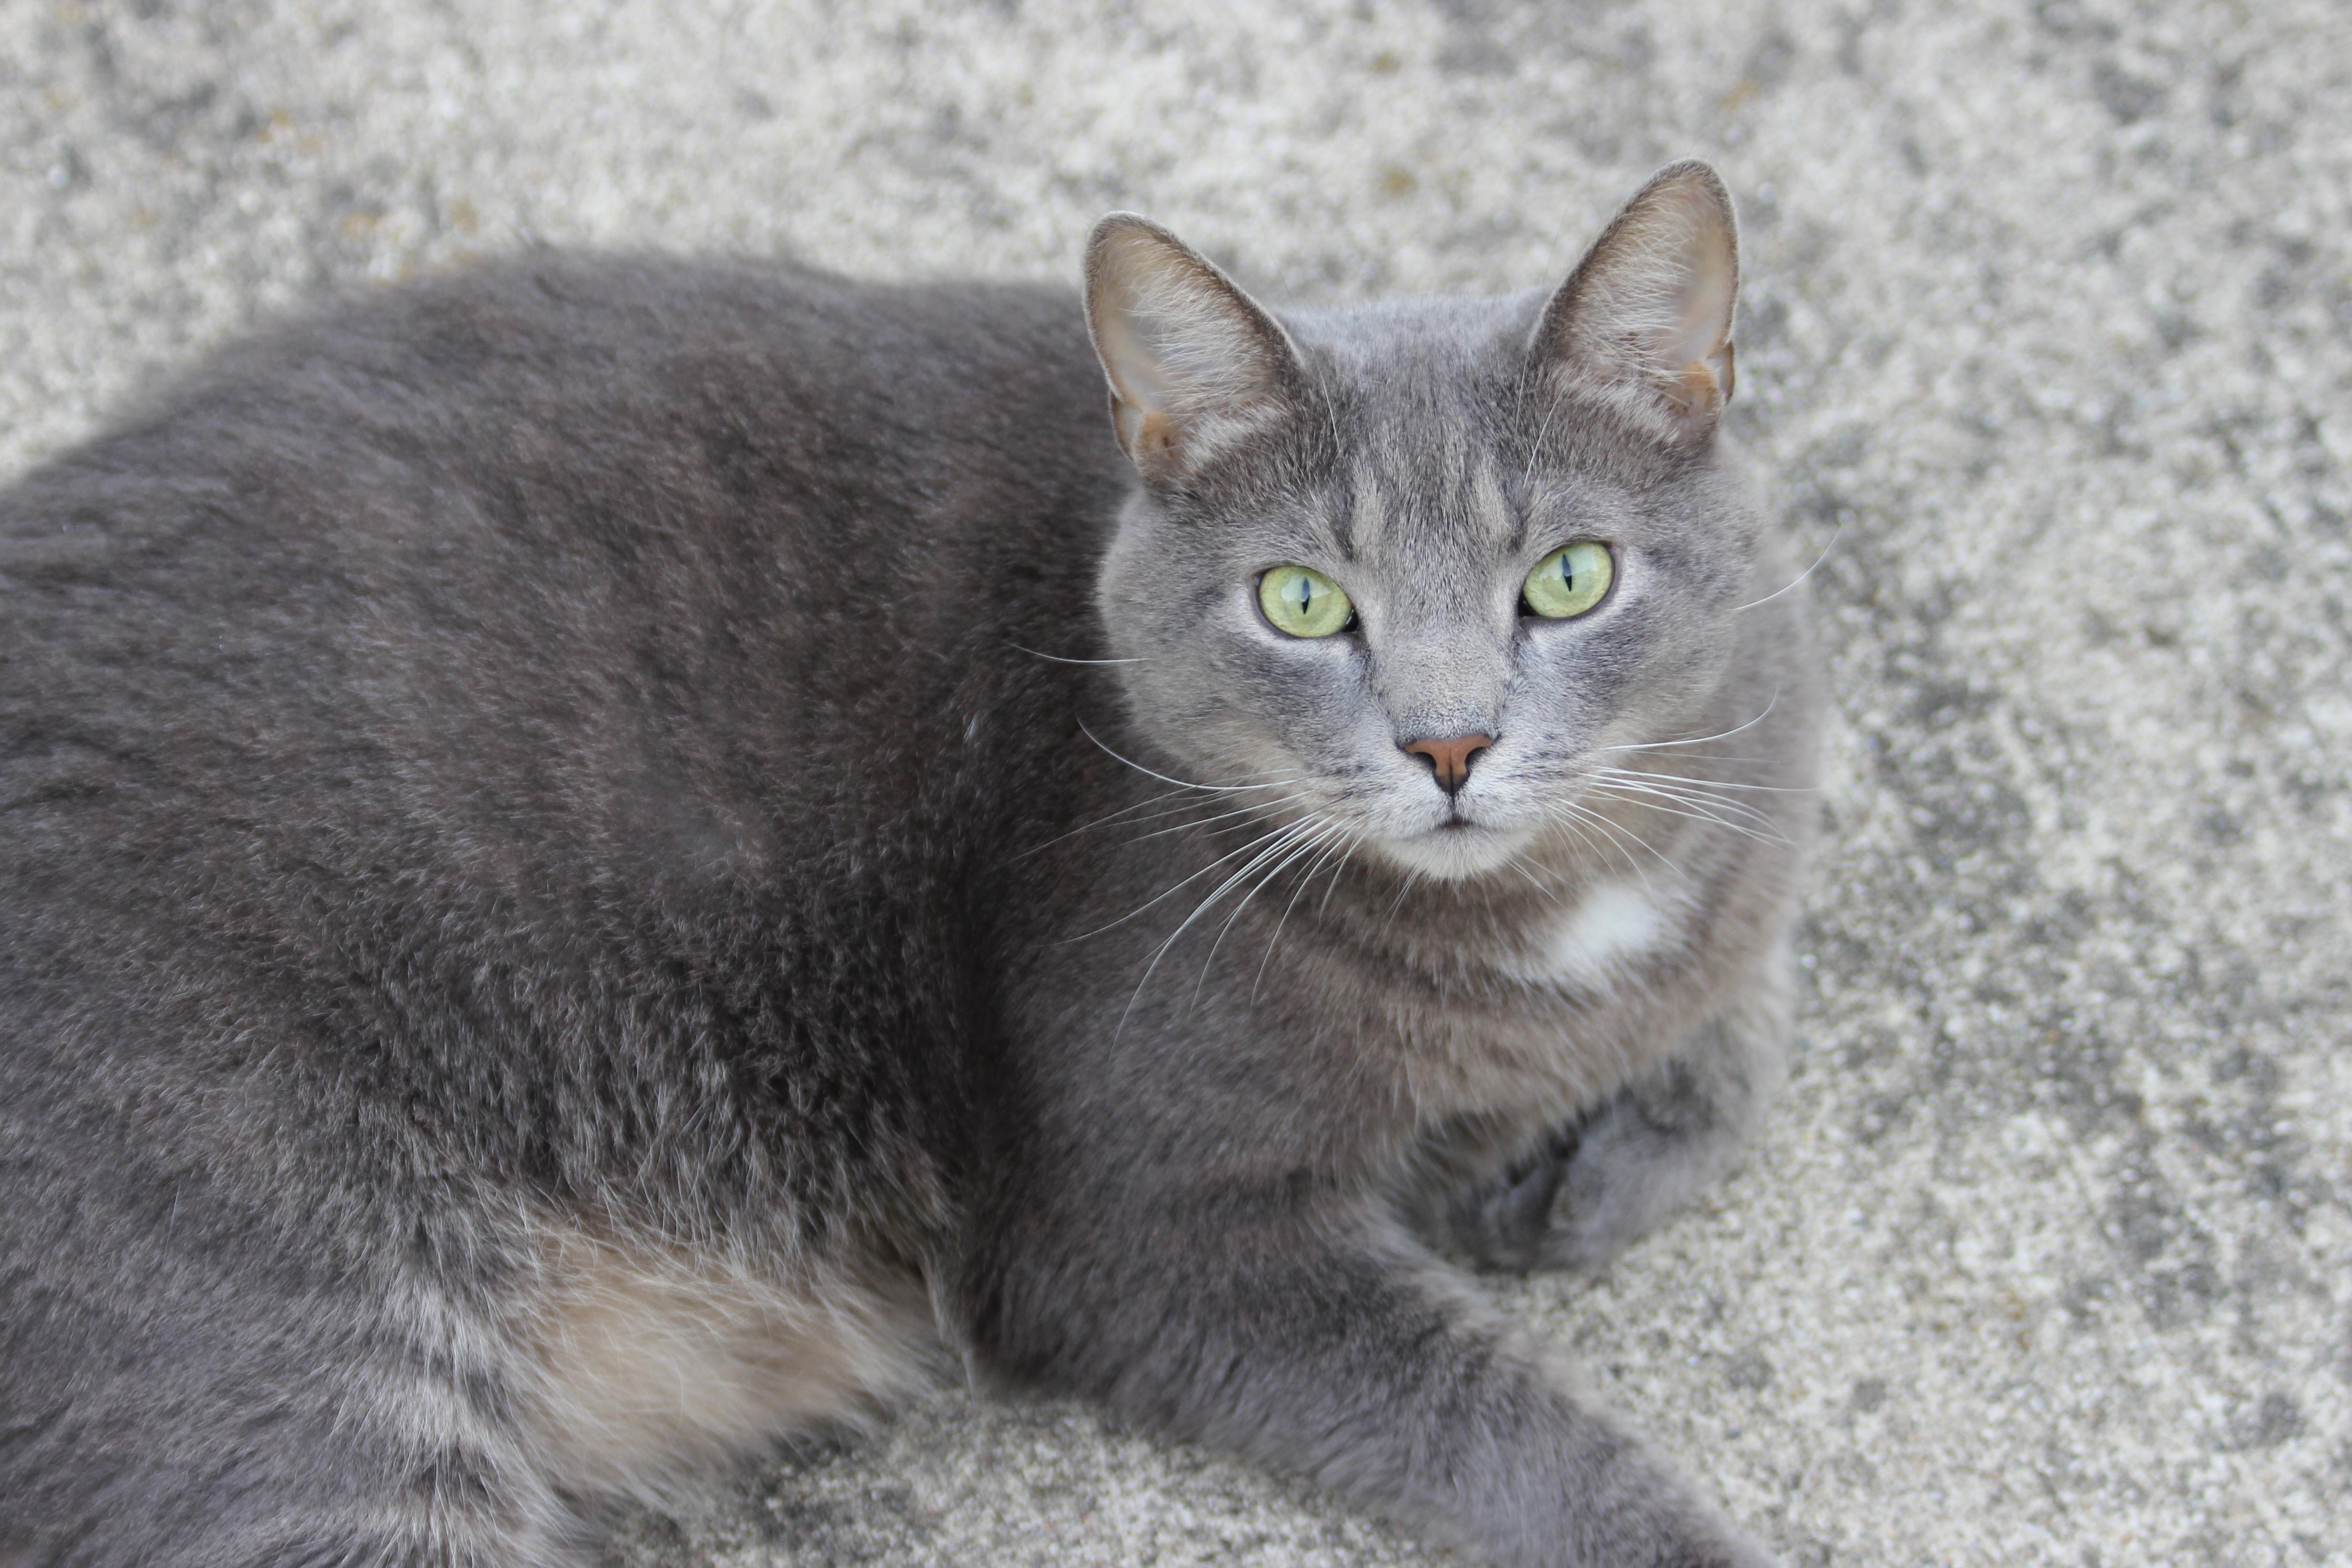 Free picture: gray cat, cute, pet, animal, portrait, grey, eye, fur ...